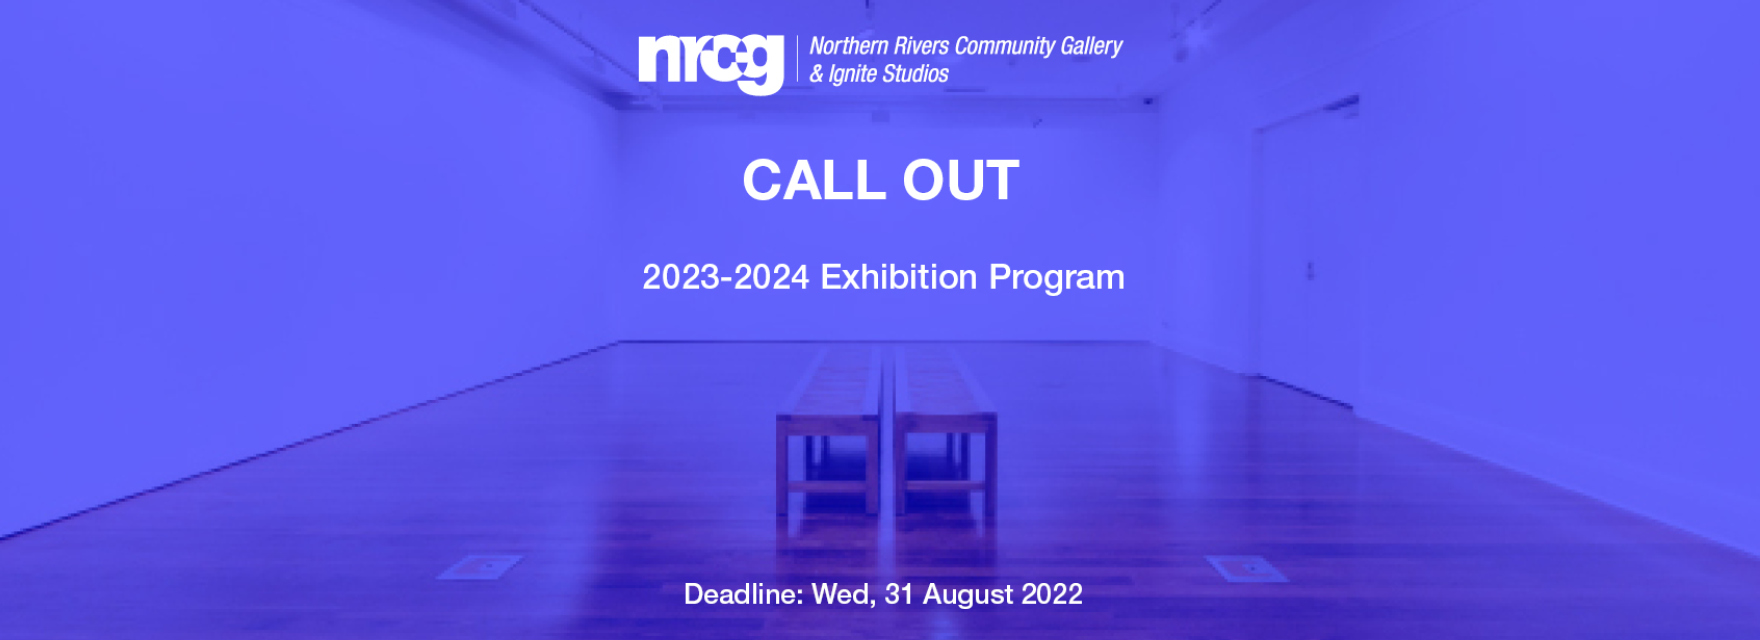 NRCG 2023-2024 Exhibition Program, Image of Gallery 4.